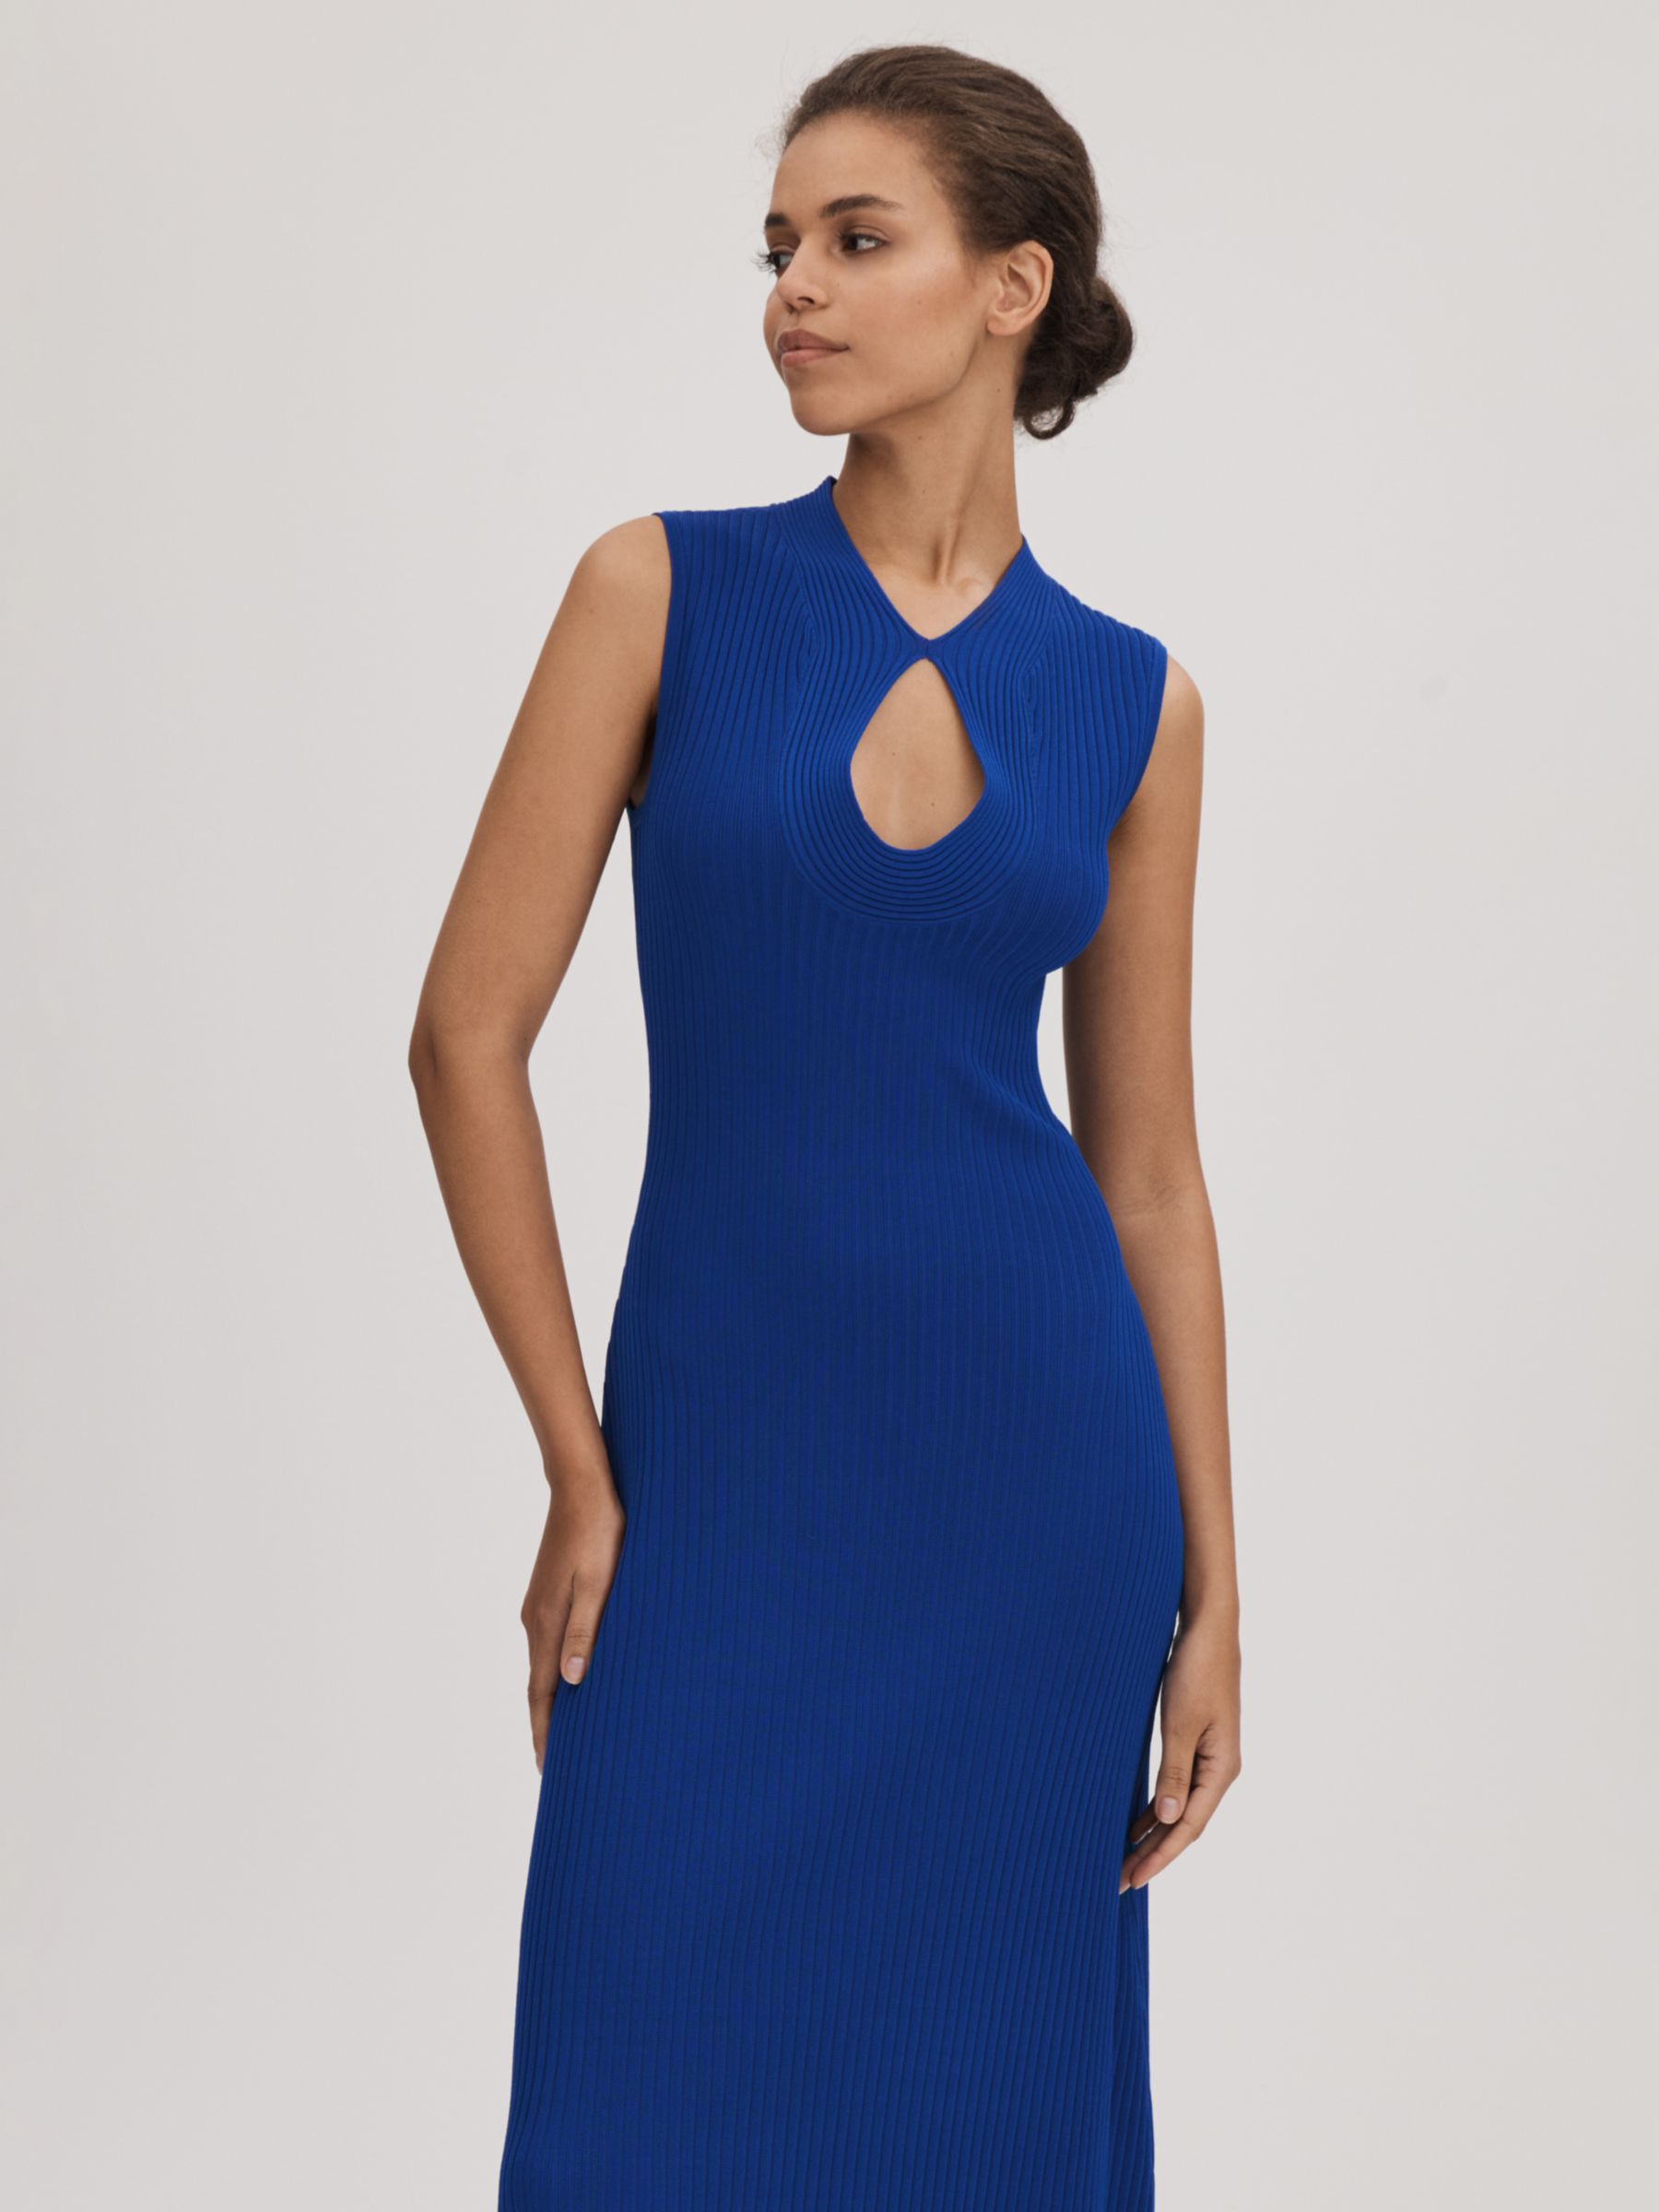 FLORERE Keyhole Sleeveless Midi Dress, Bright Blue, 8